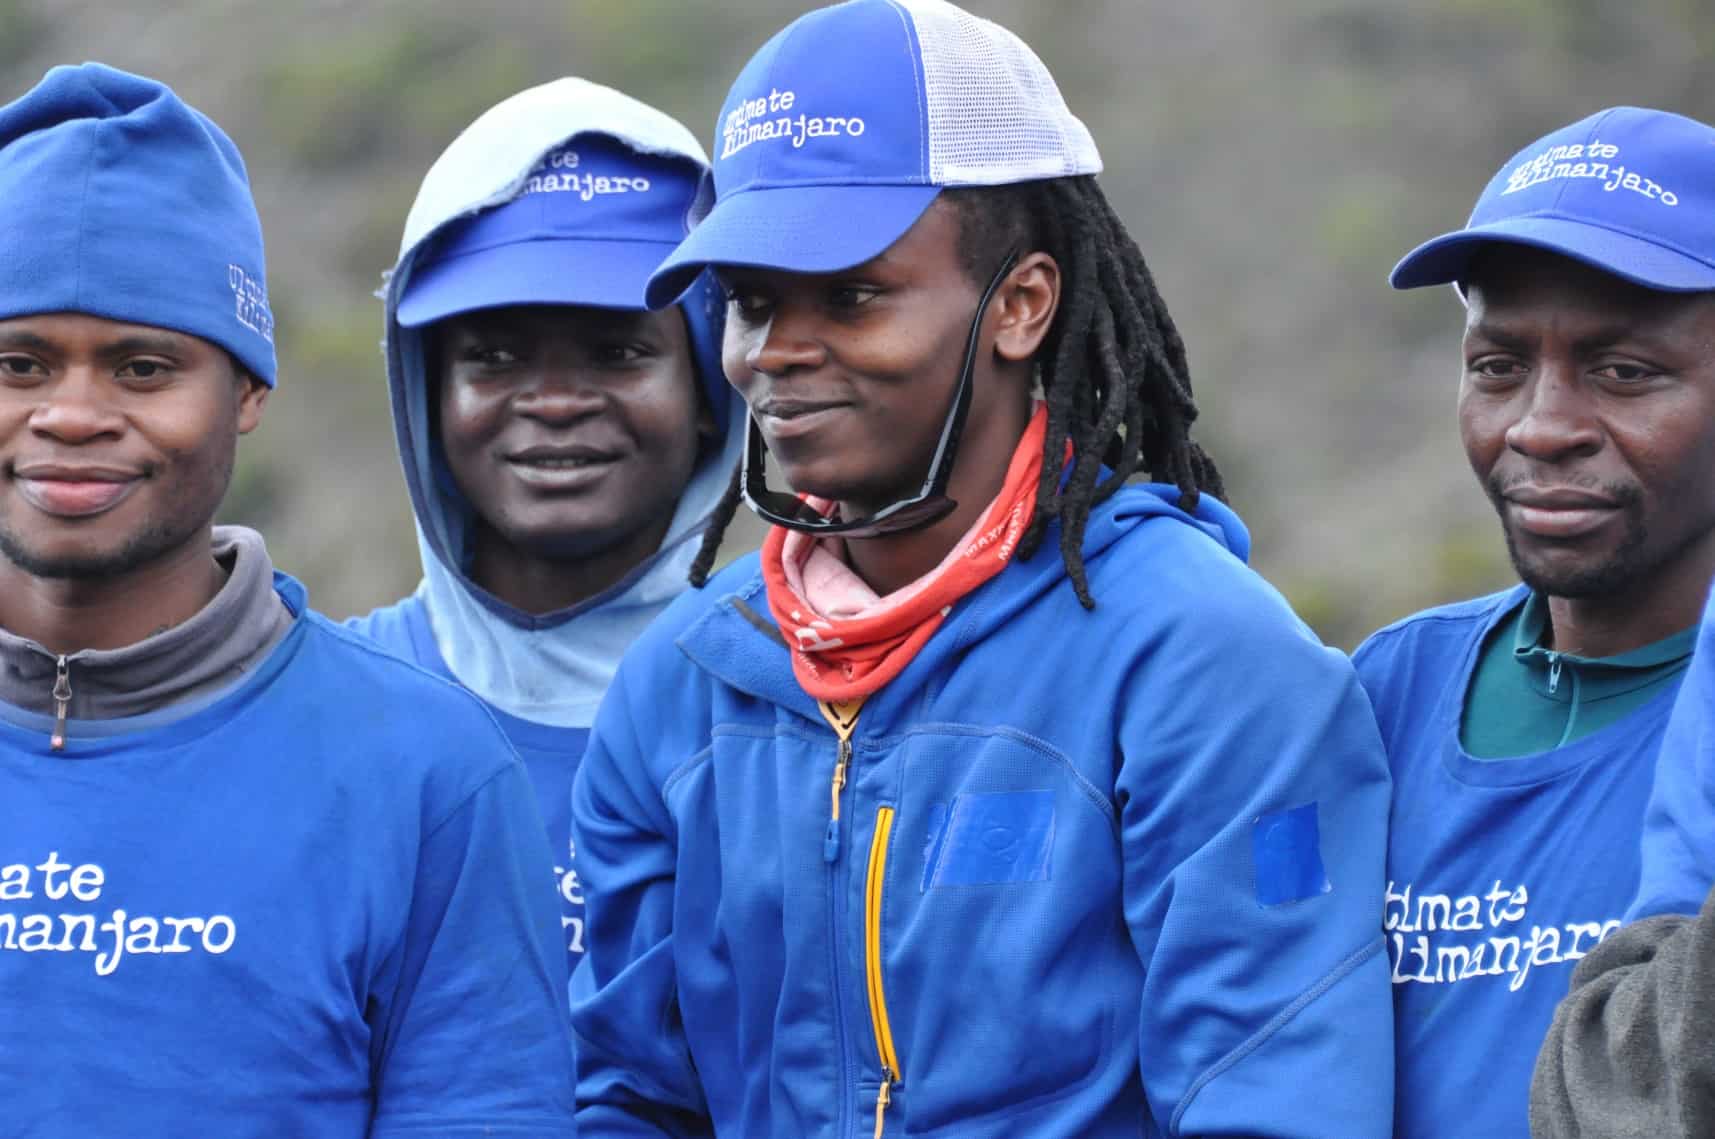 Are All Kilimanjaro Crews Treated Fairly?